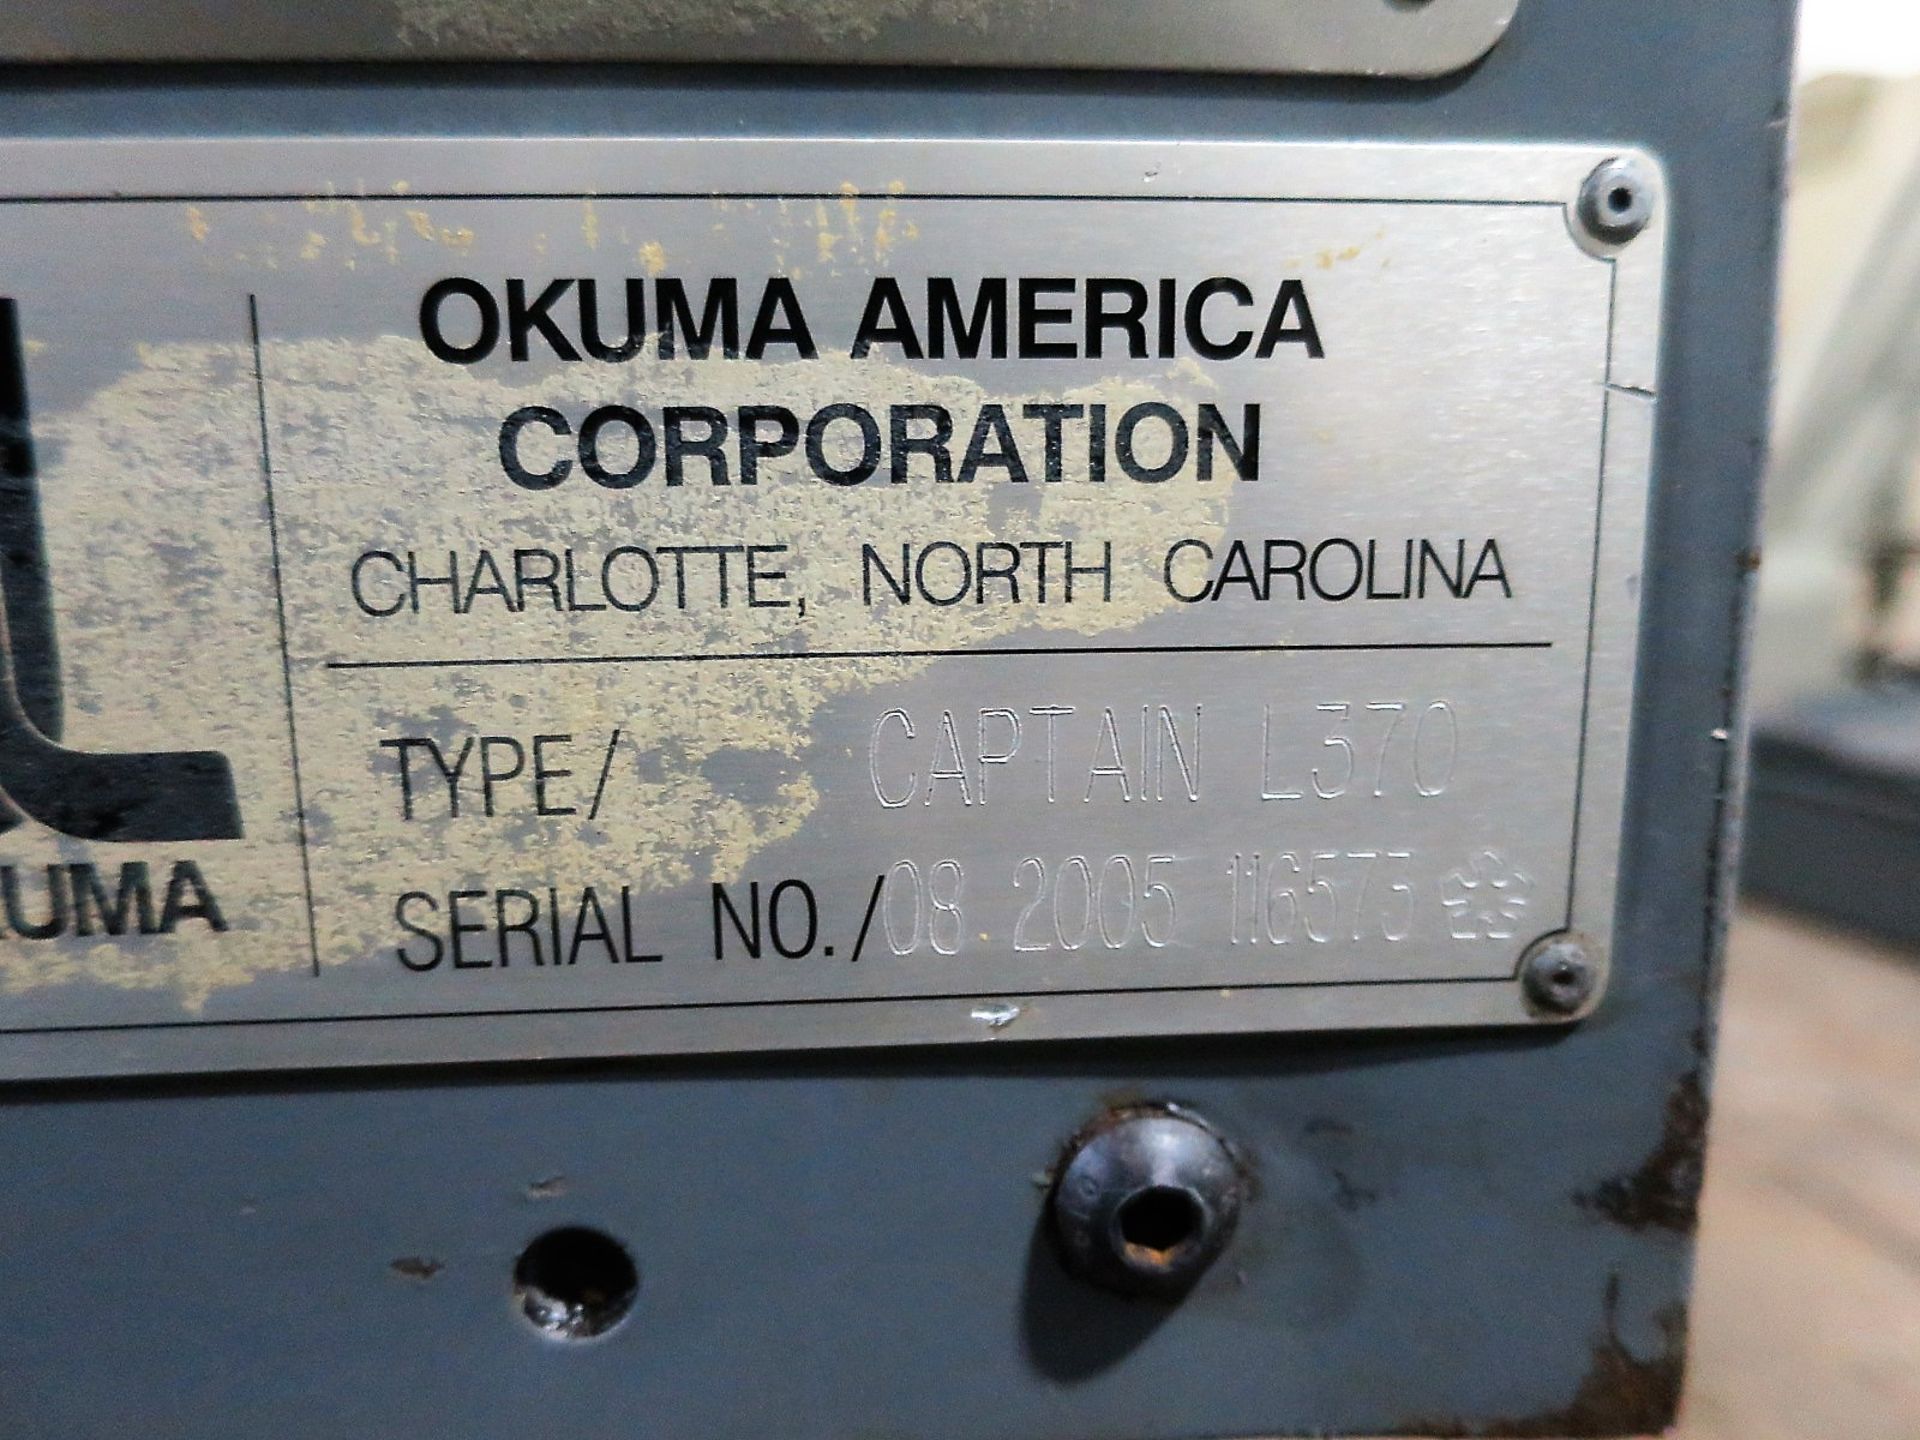 Okuma Captain L370 2-Axis CNC Turning Center Lathe, S/N 116573, New 2005 - Image 10 of 10